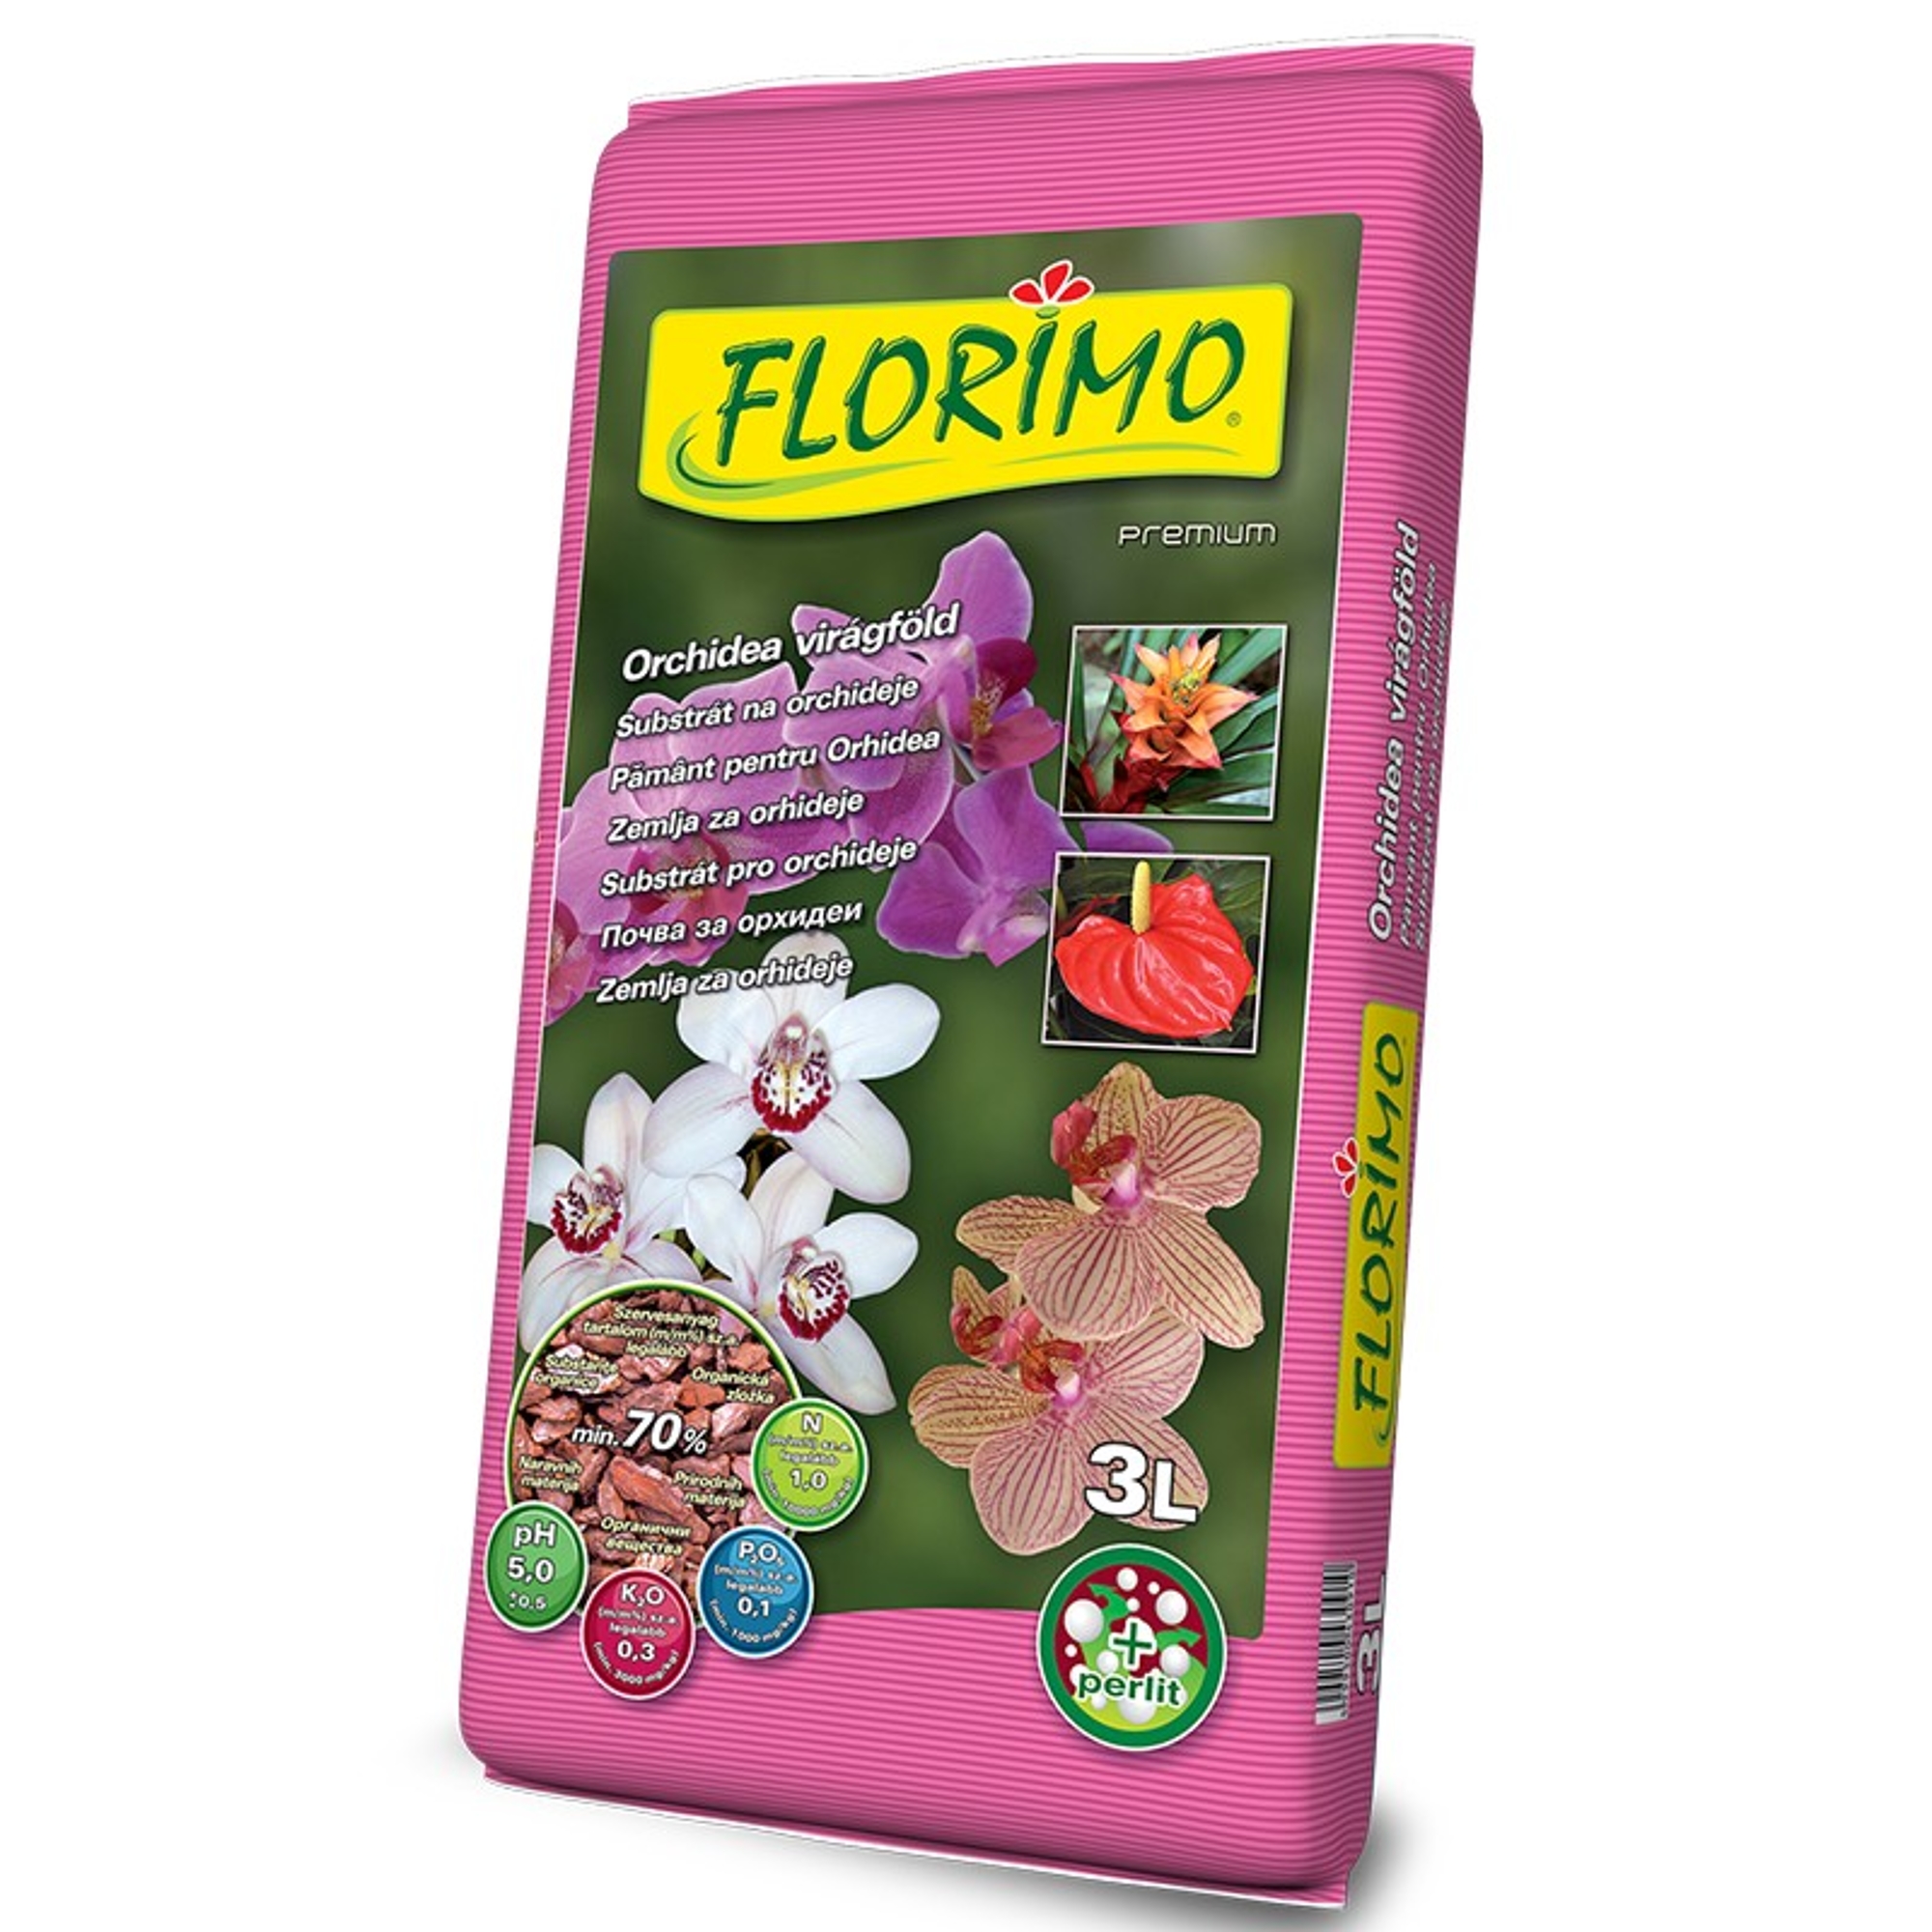 Florimo orchidea virágföld 3 l